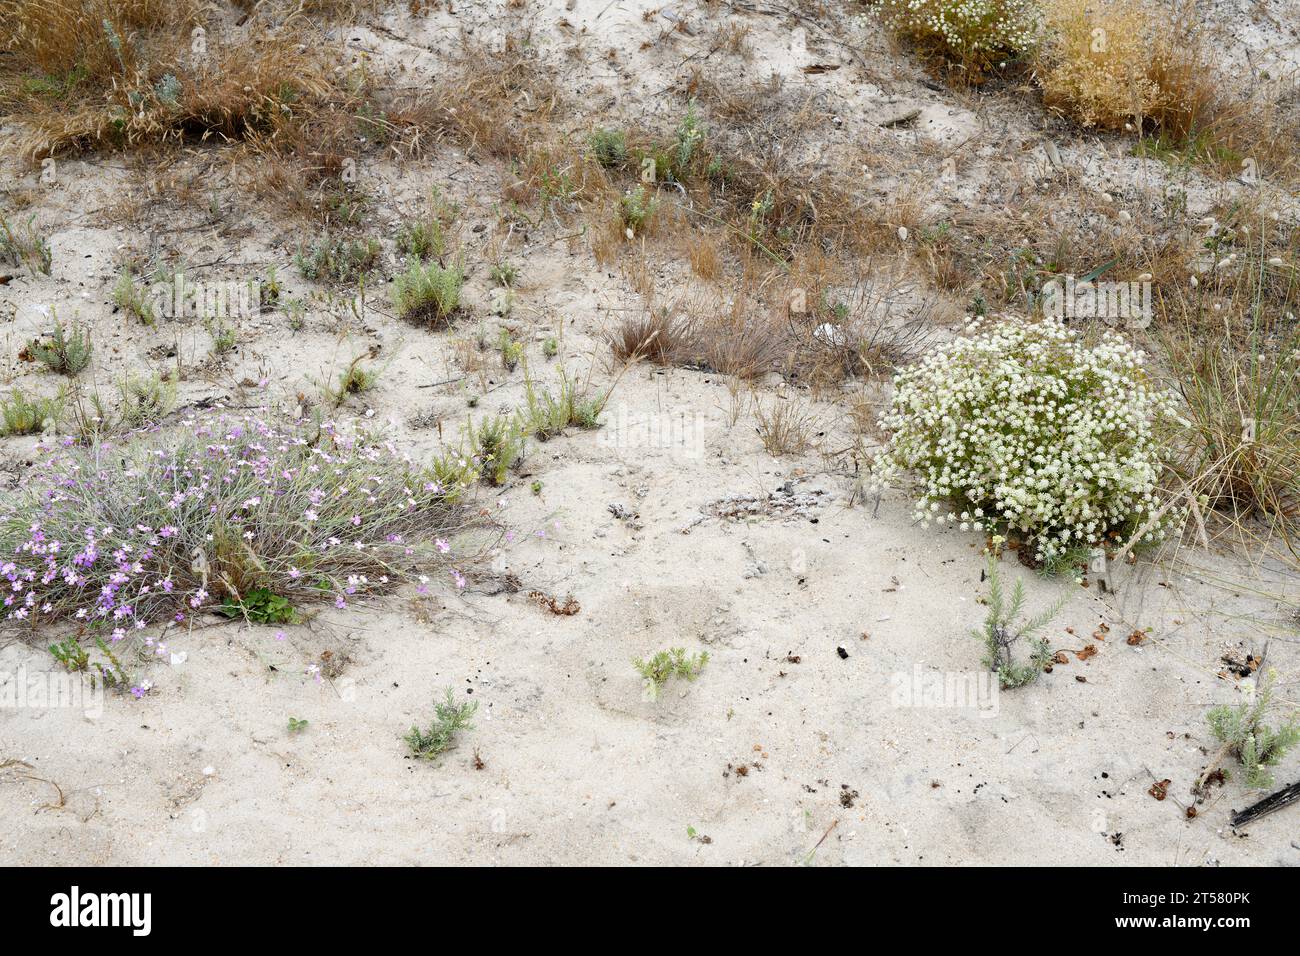 Malcolmia ramosissima (left) and Seseli tortuosum (right). Malcolmia ramosissima is an annual plant native to western Mediterranean region. This photo Stock Photo